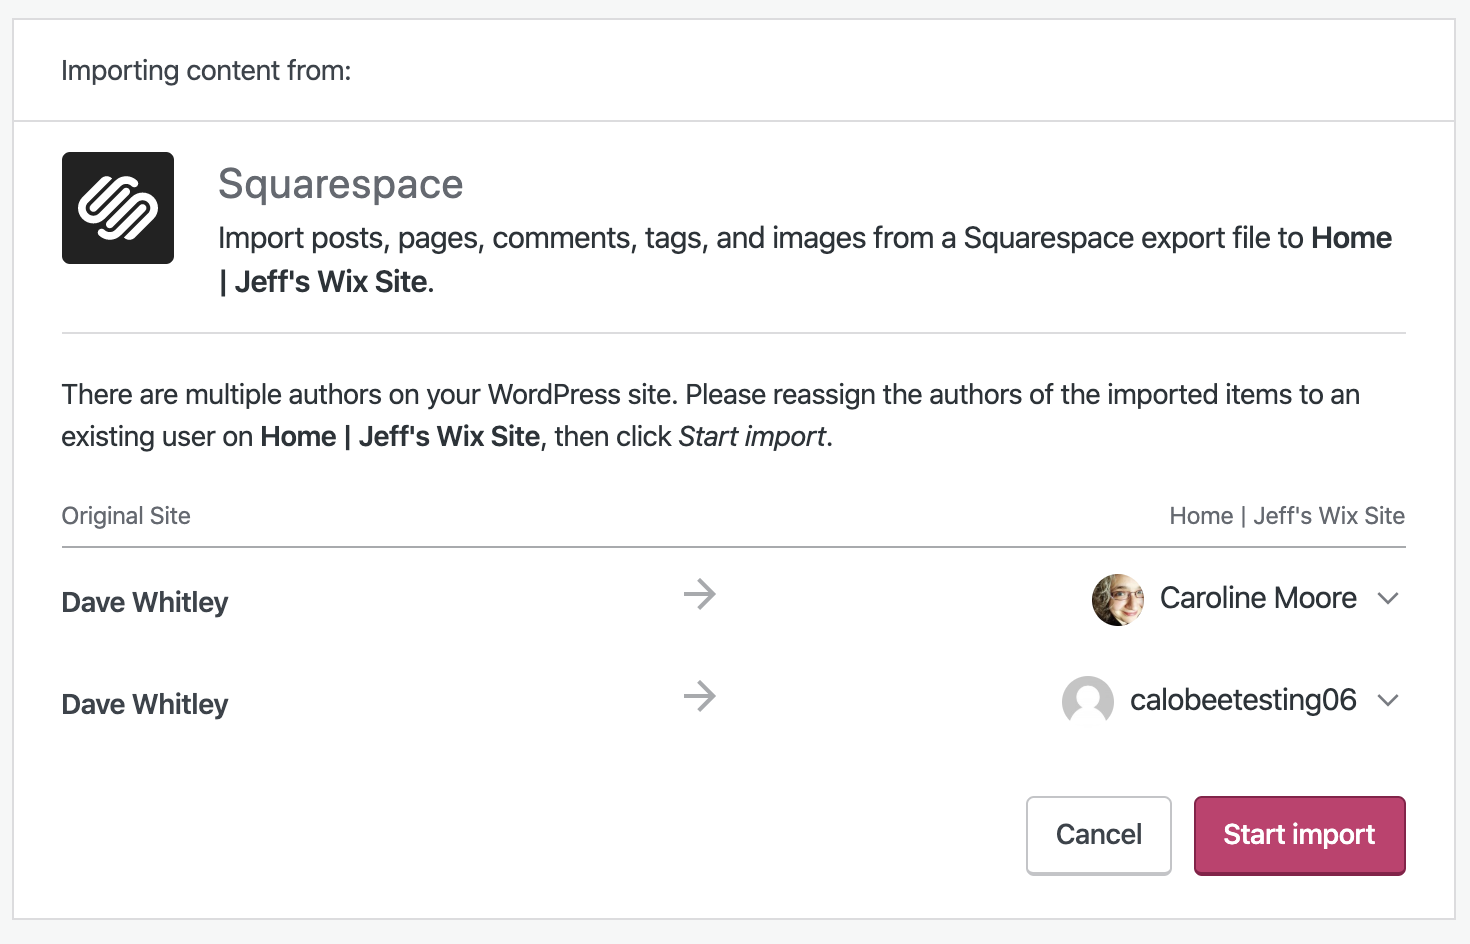 Squarespace importer author assignment screen